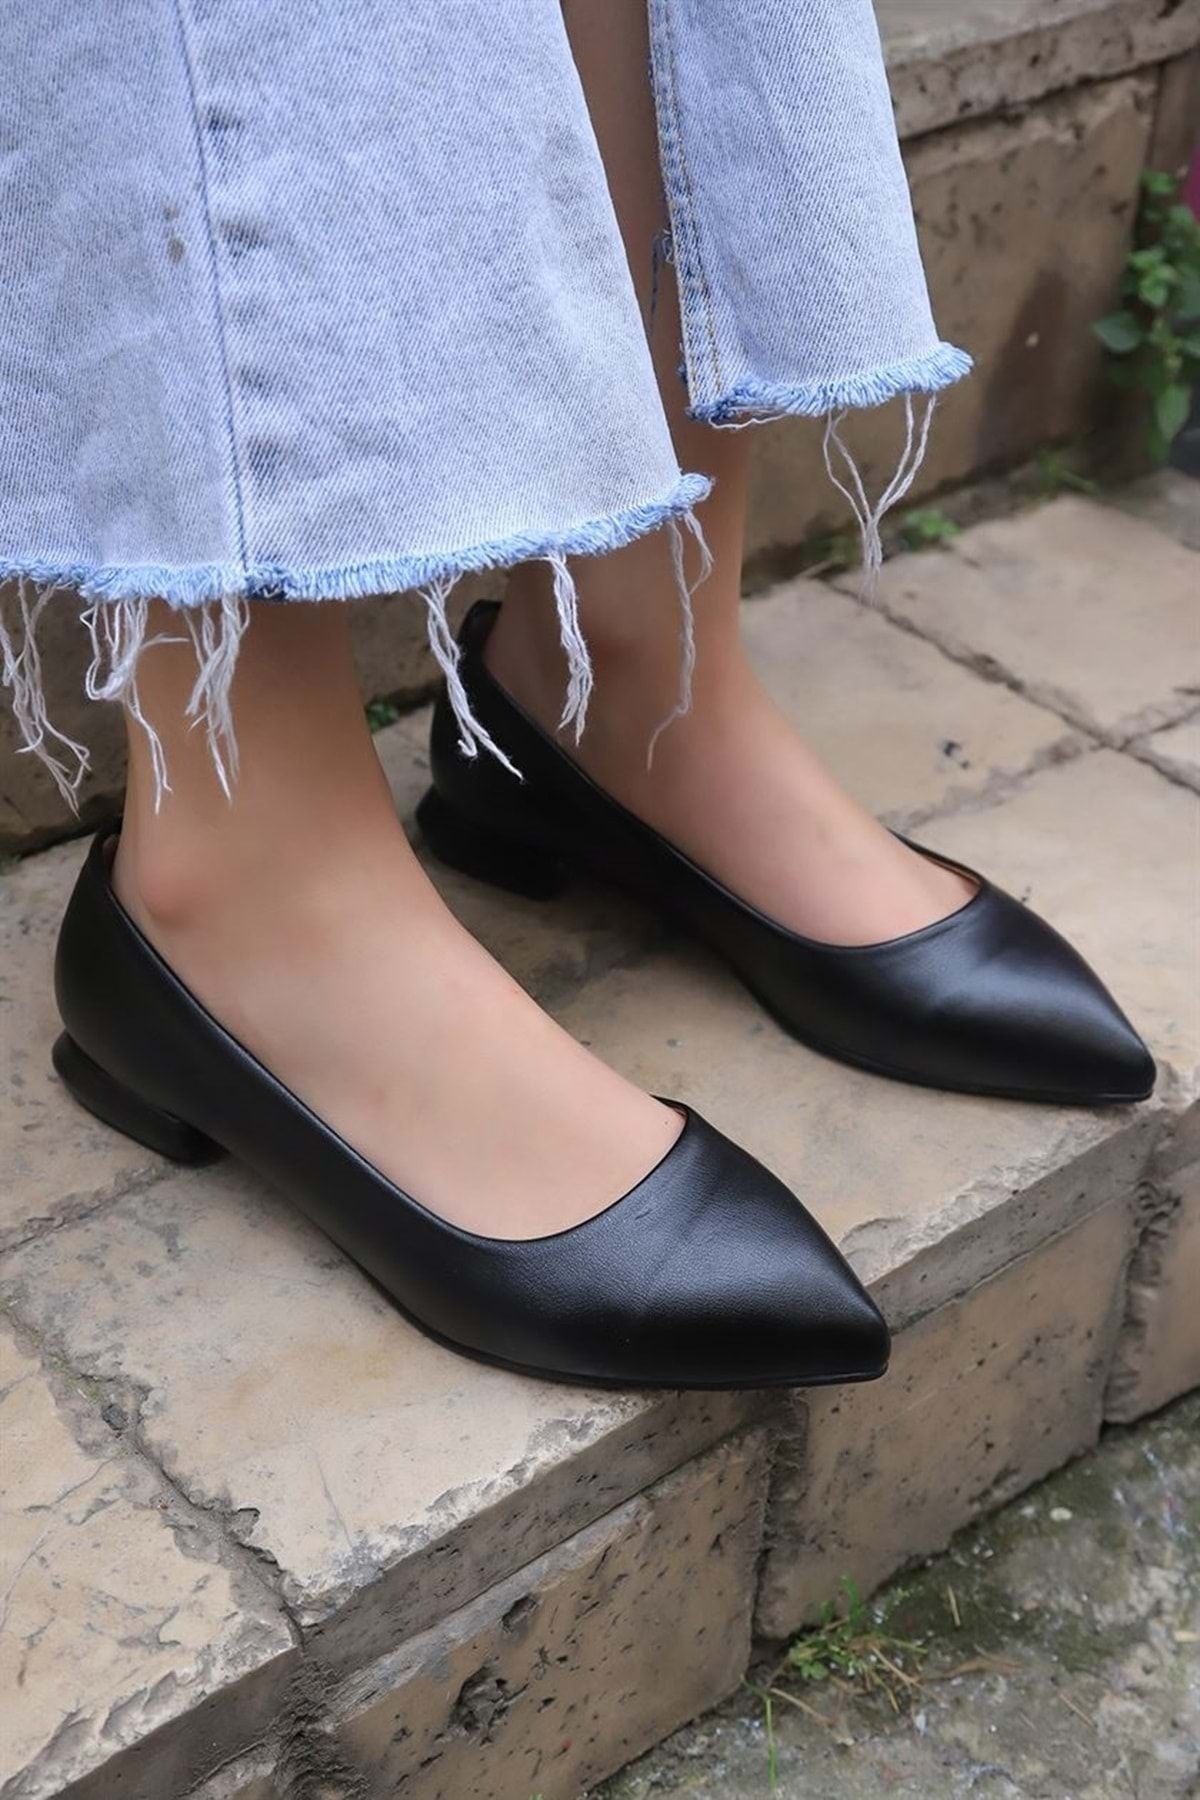 TRENDBU AYAKKABI Kadın Siyah Babet Topuklu Ayakkabı - Siyah - 39